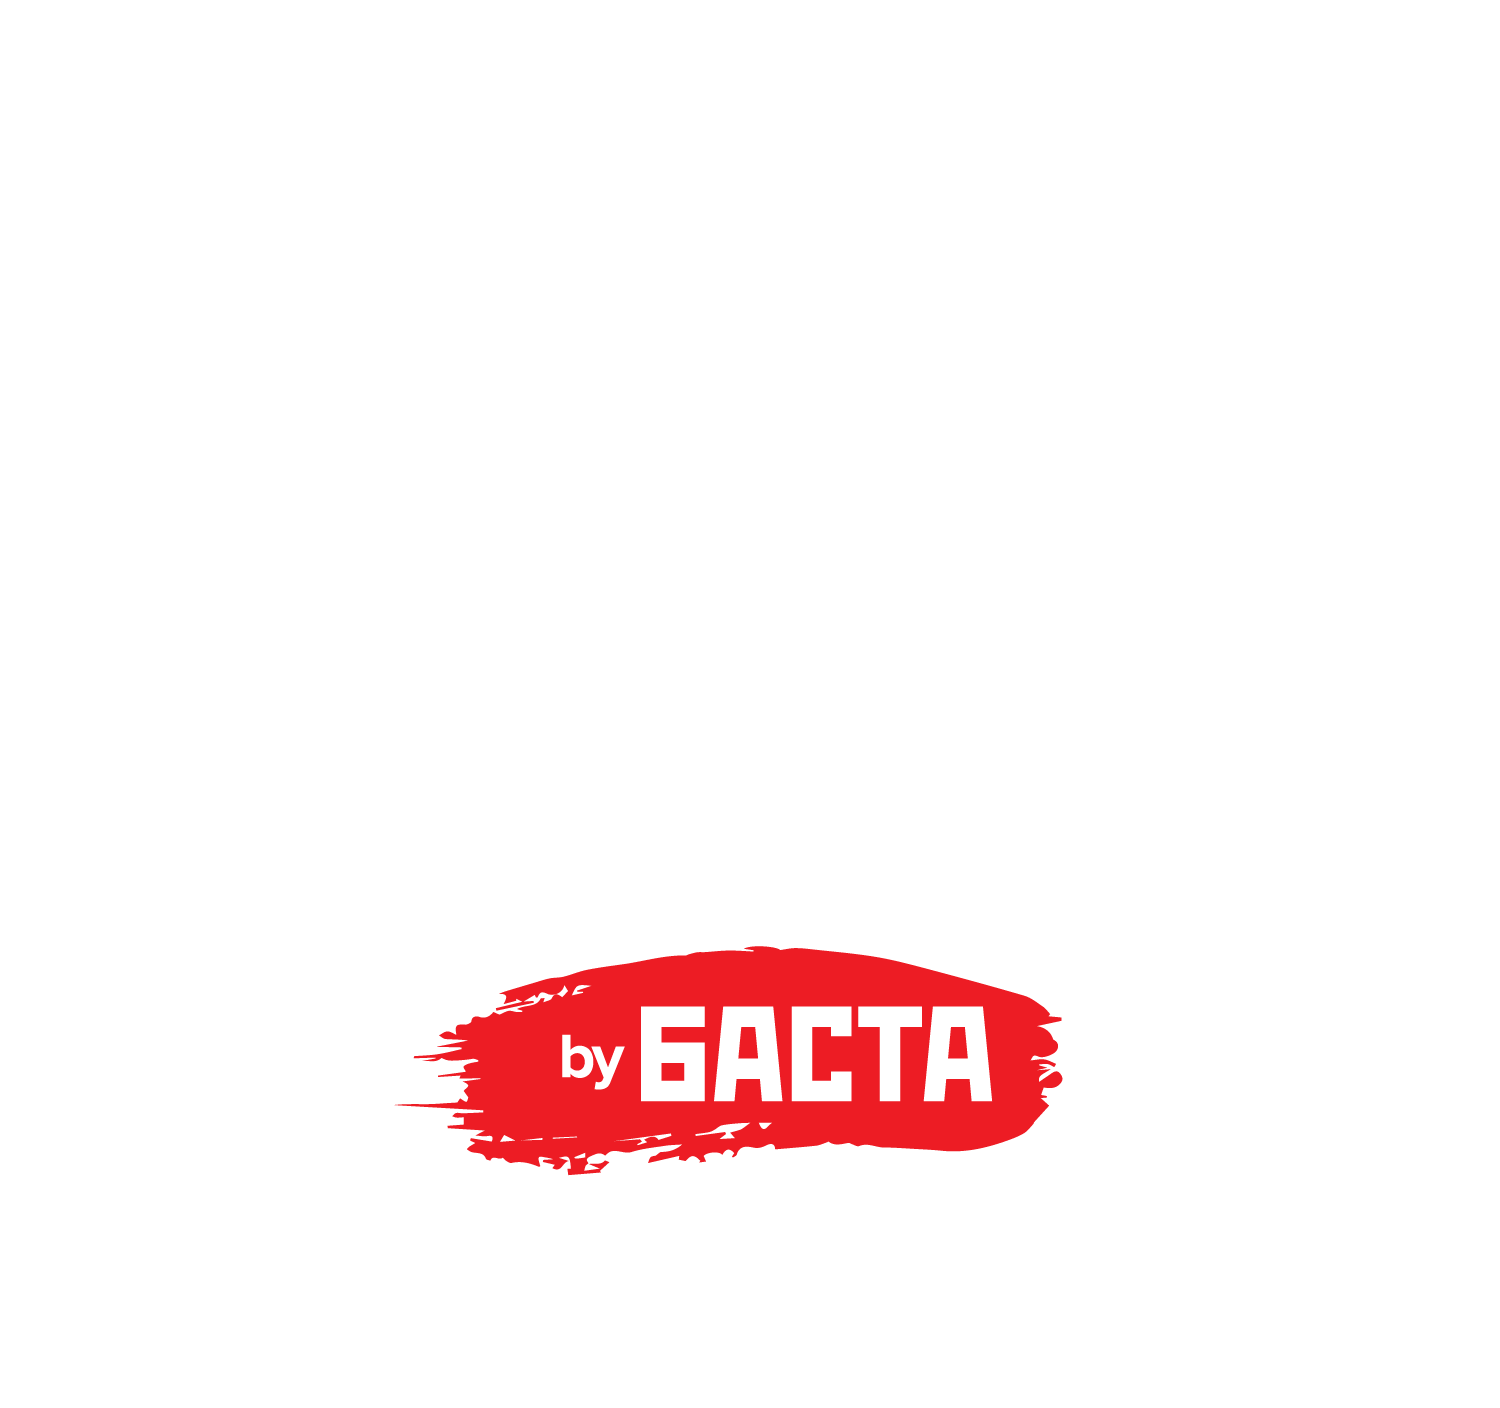 Фрэнк Баста. Frank basta лого. Фрэнк бай Баста. Ресторан Франк бай Баста. Френд бай баста